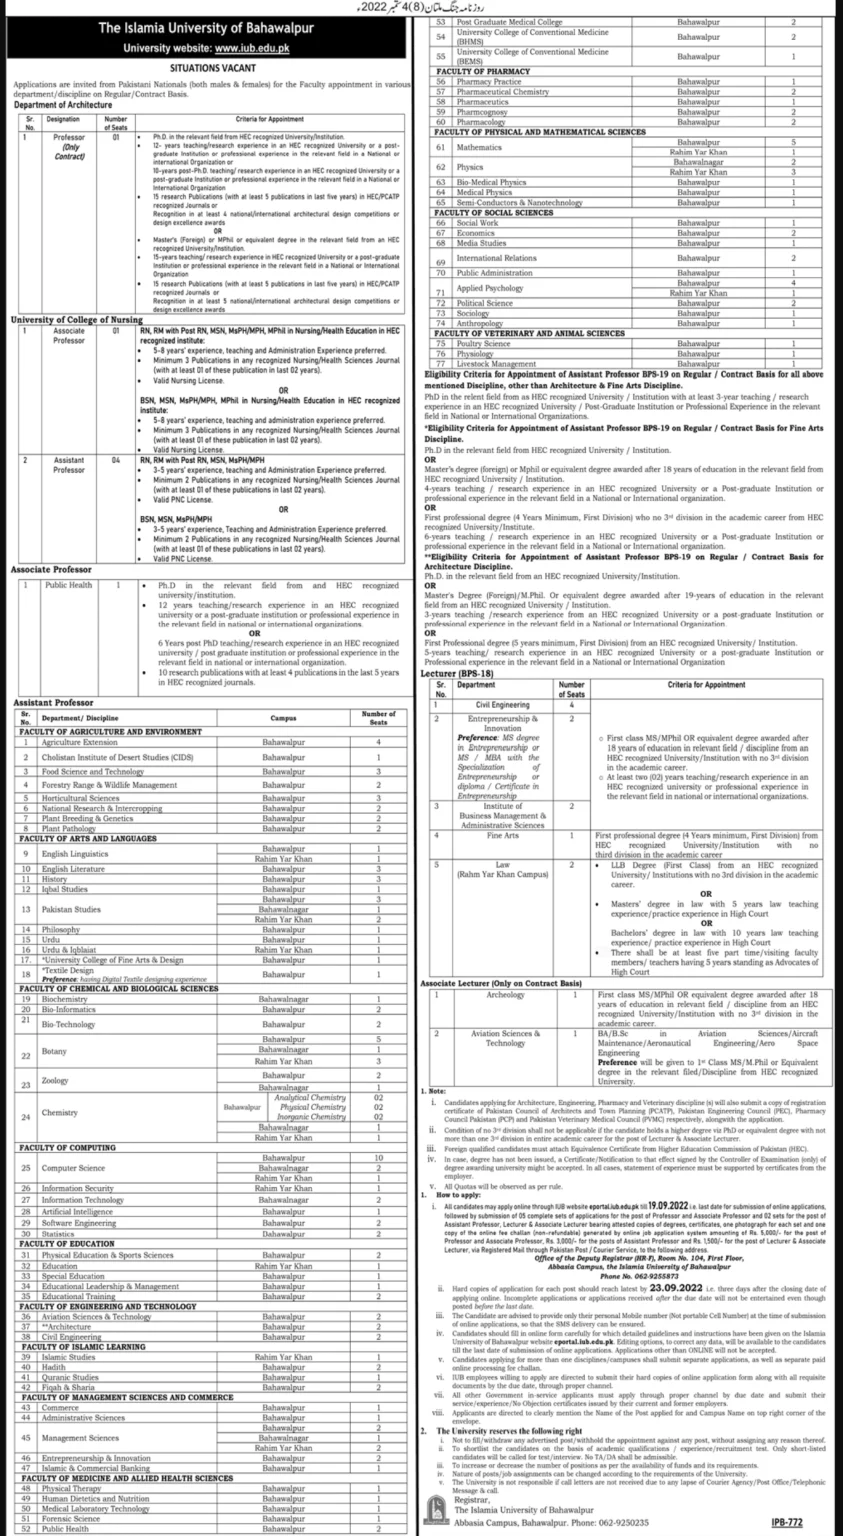 Islamia University of Bahawalpur IUB Jobs 2022 Advertisement - www.iub.edu.pk